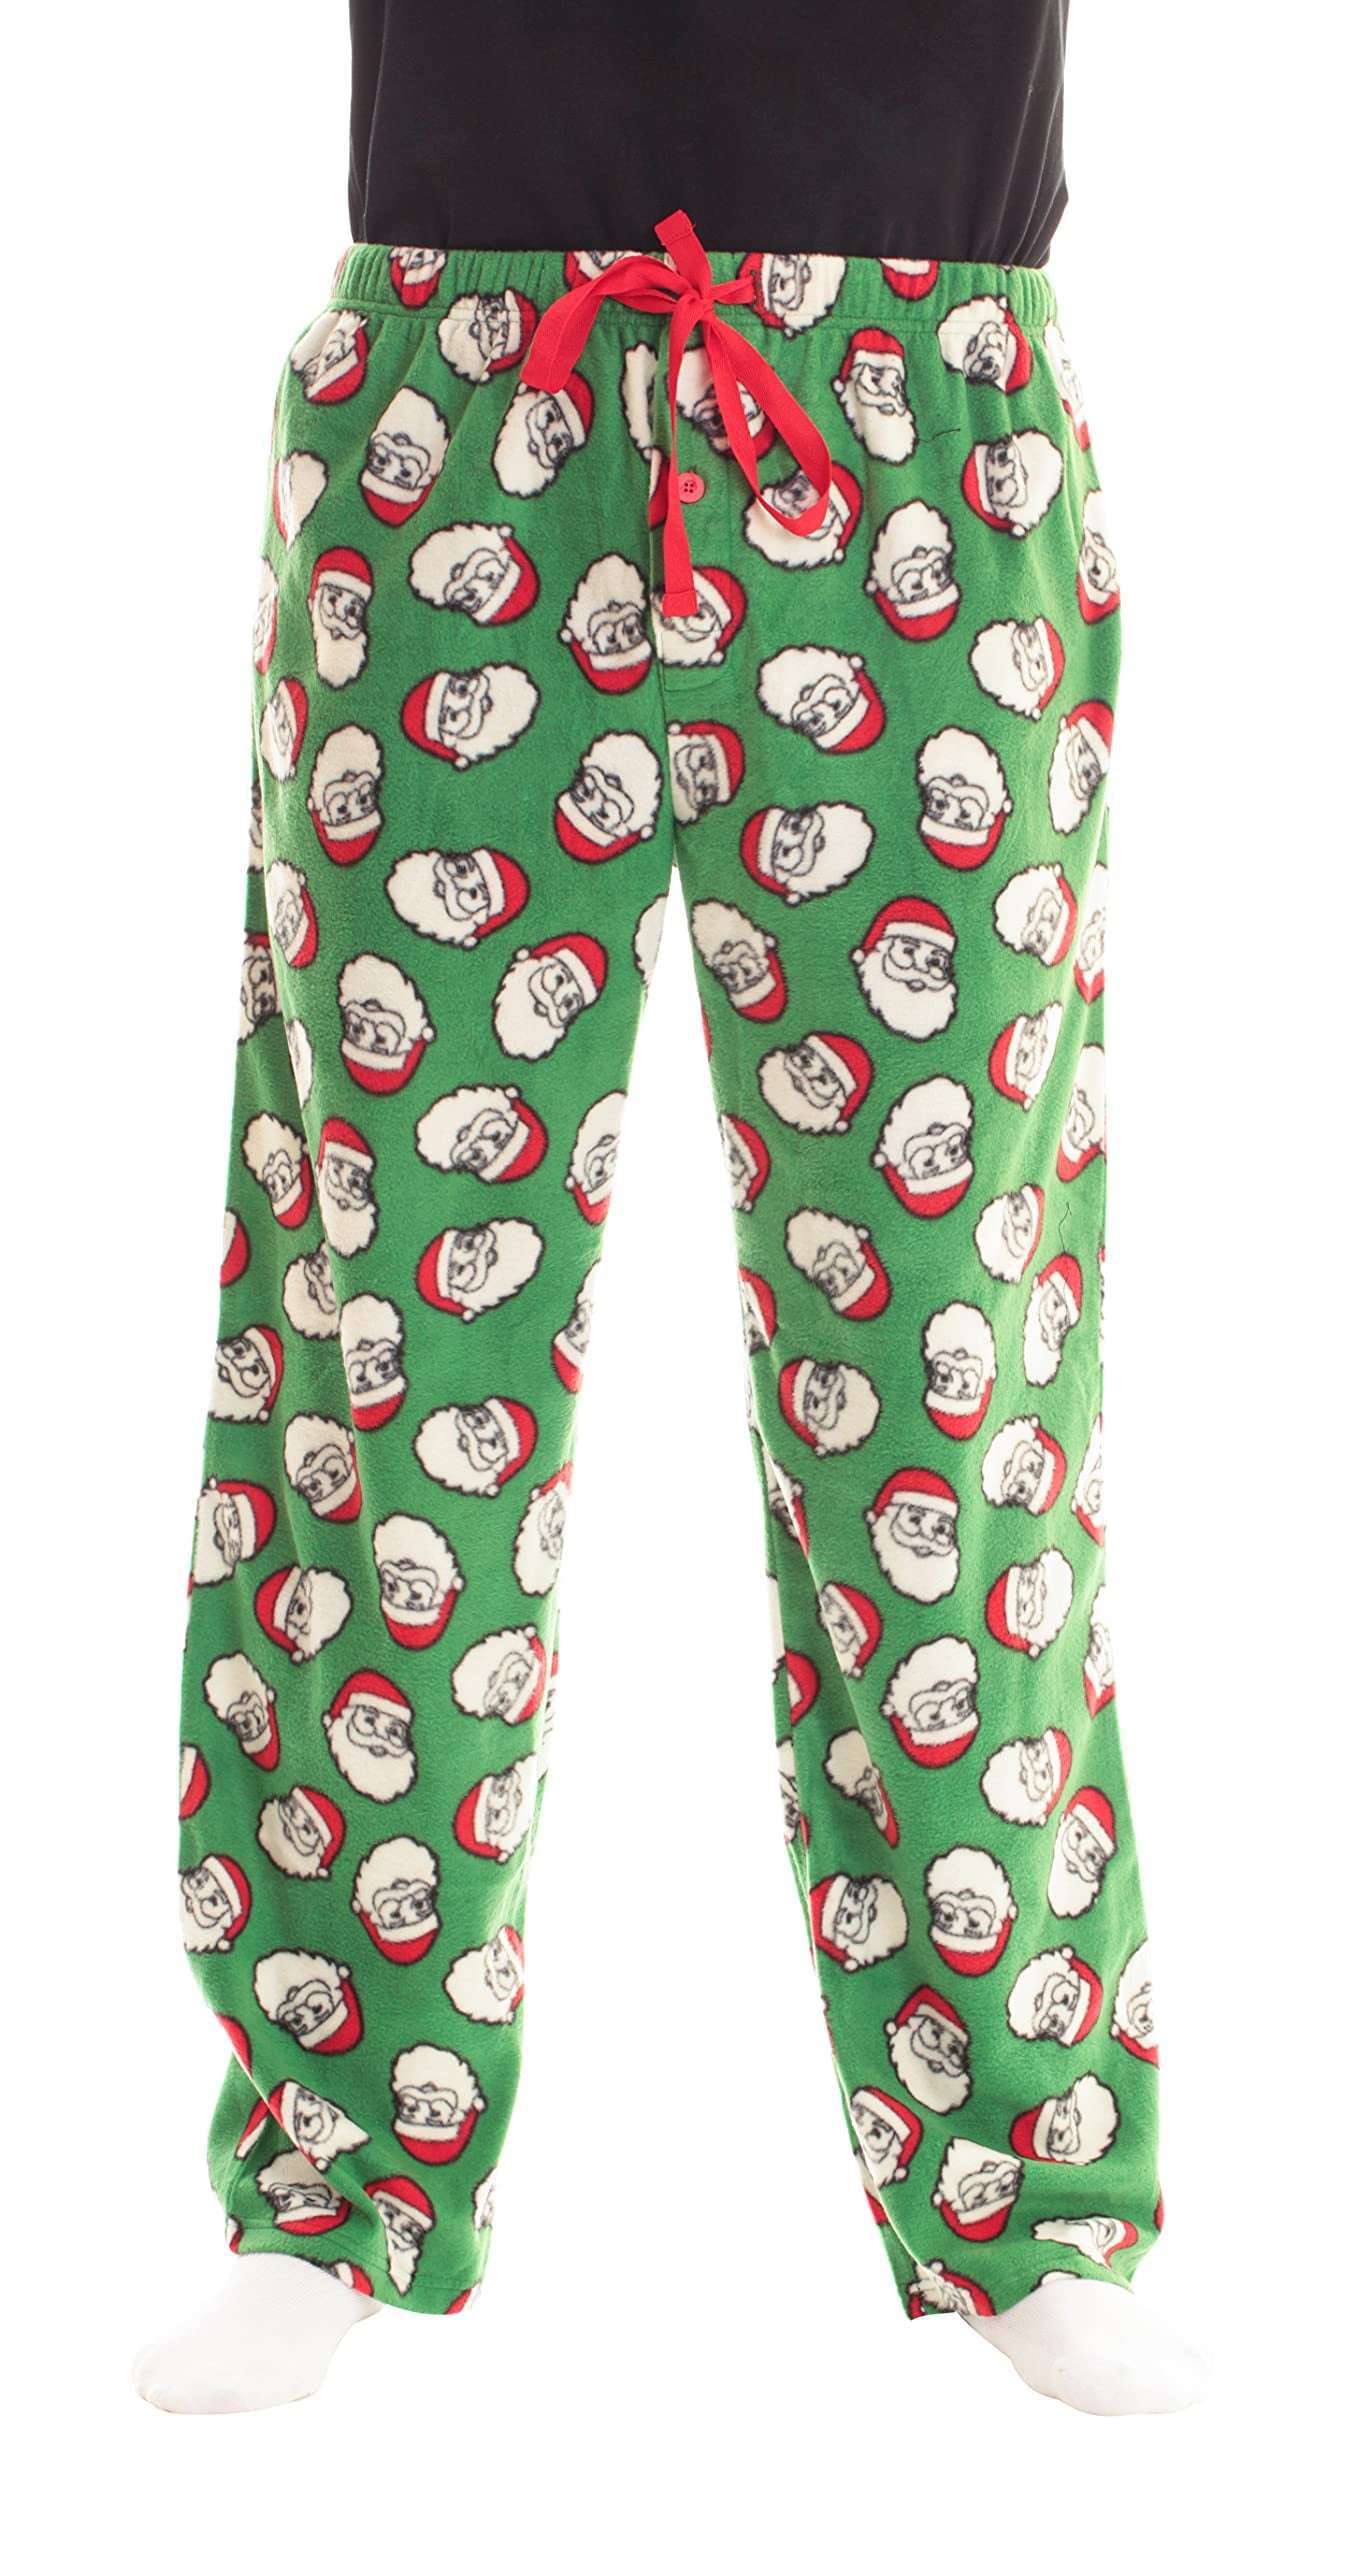 FollowMe 45902-1A-S Polar Fleece Pajama Pants for Men/Sleepwear